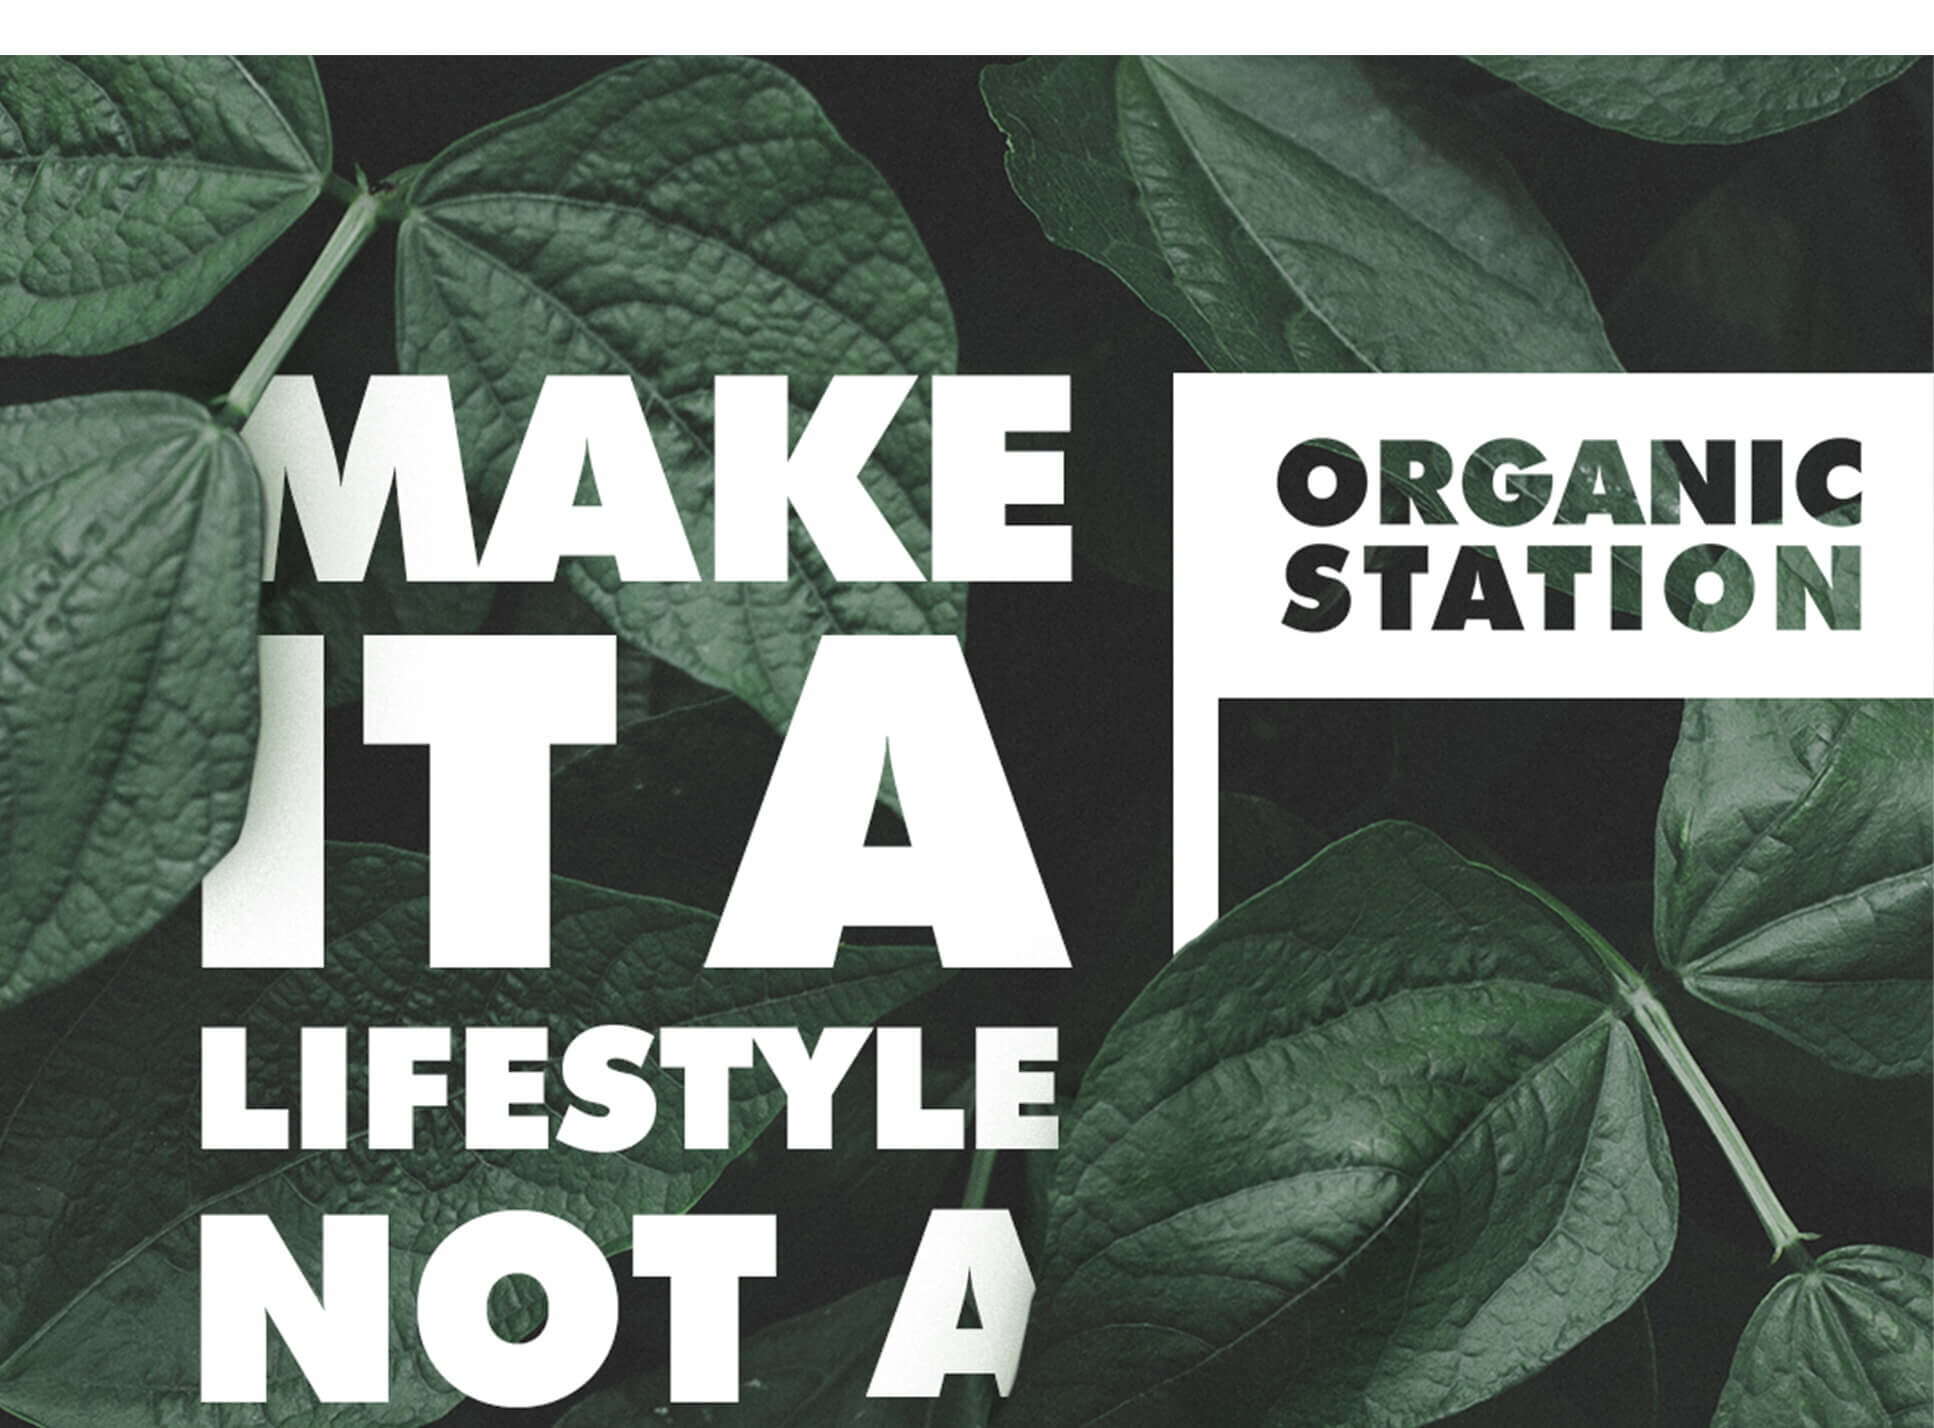 Organic Station slogan visualisation